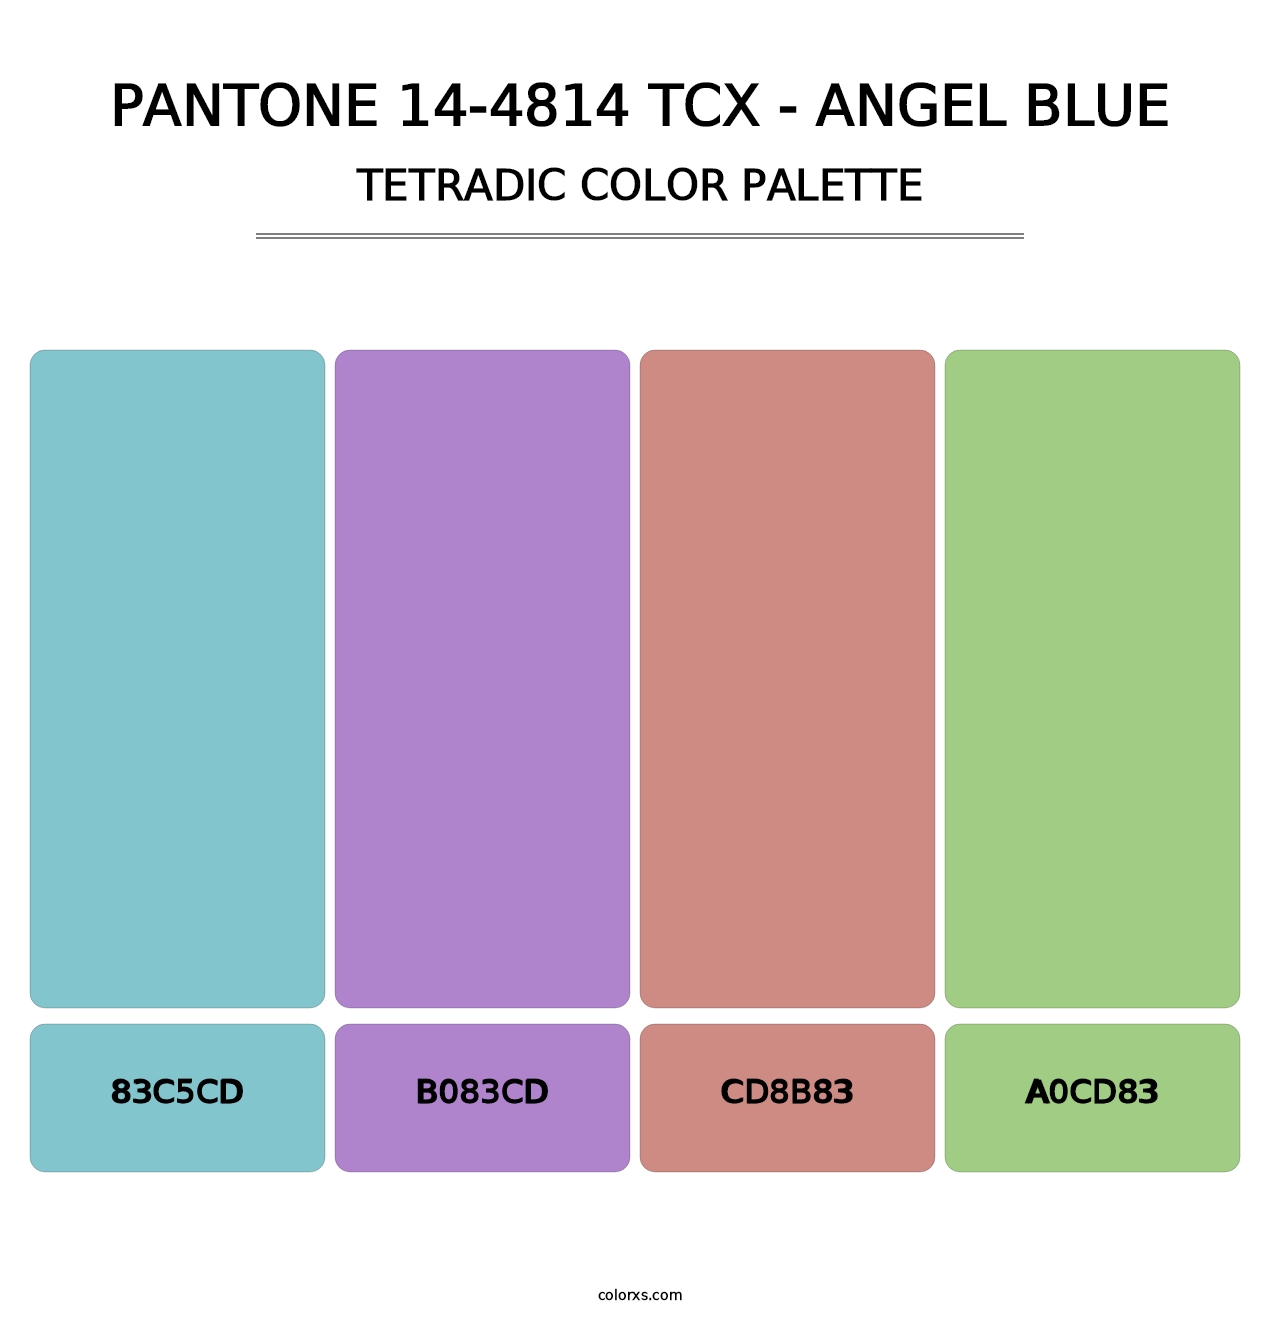 PANTONE 14-4814 TCX - Angel Blue - Tetradic Color Palette